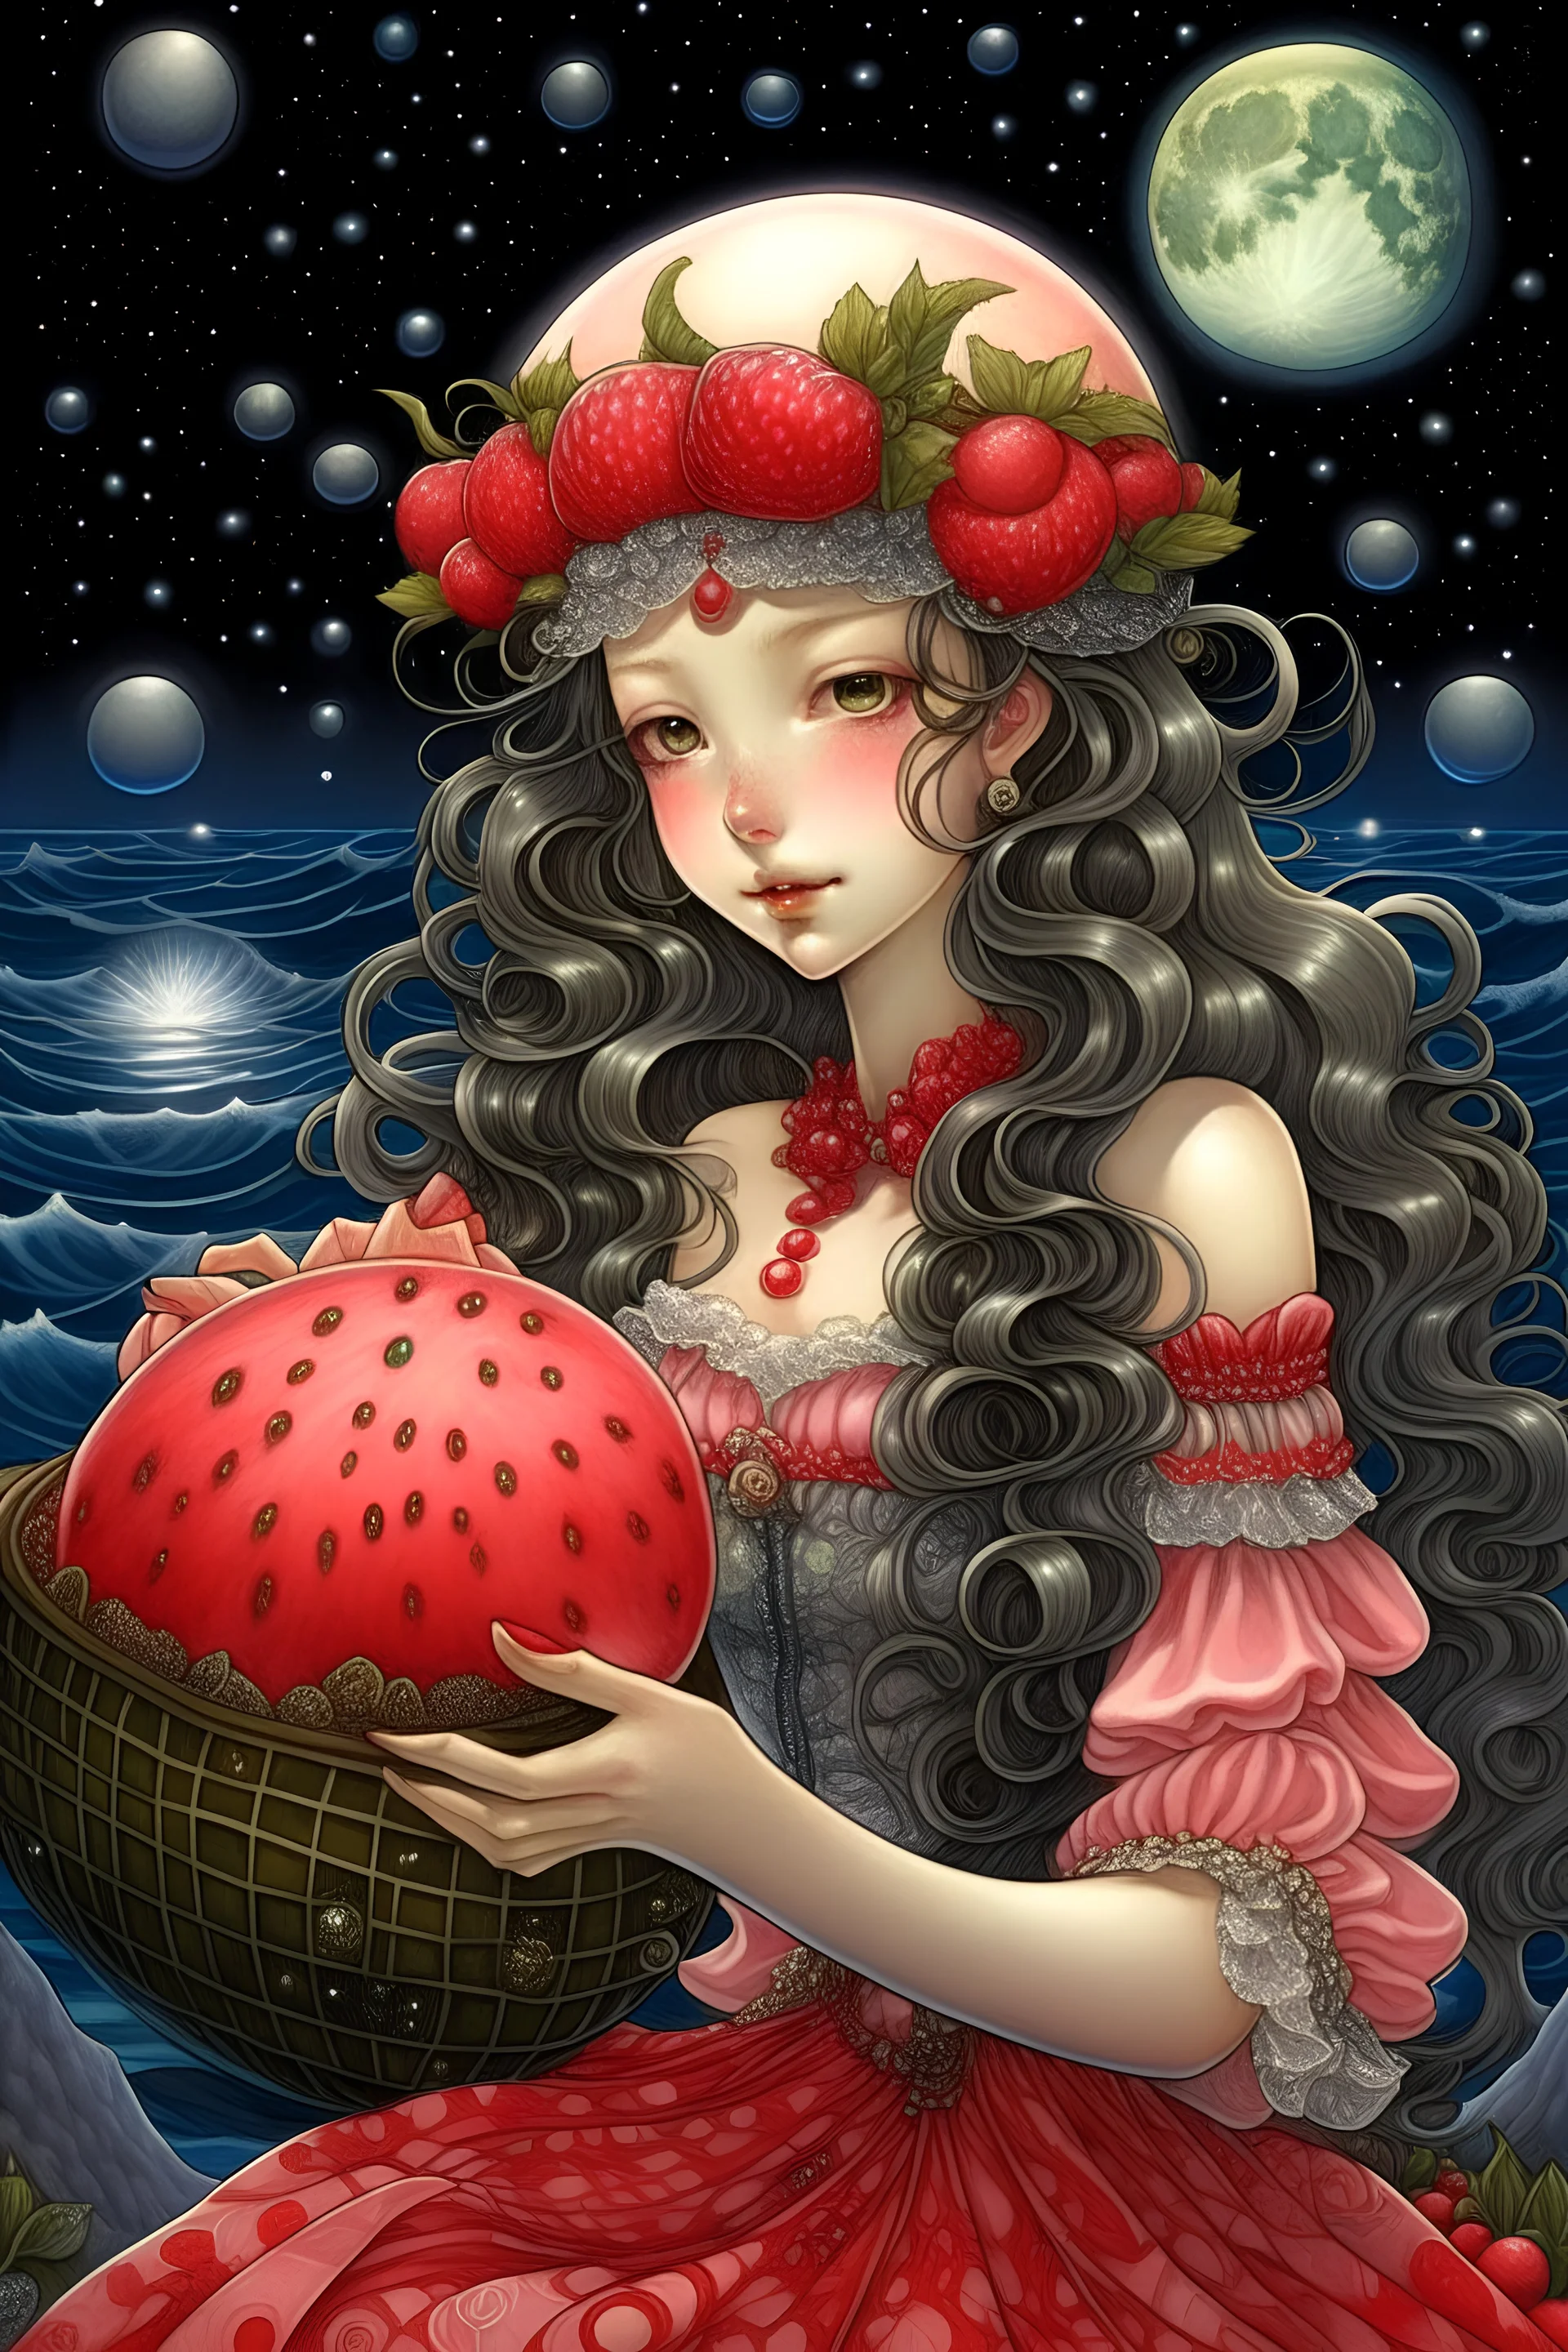 Adrienne Segur Japanese Anime Sci-Fi Fantasy Strawberry Parfait sea side Moon Night solo girl detailed definition resolution quality